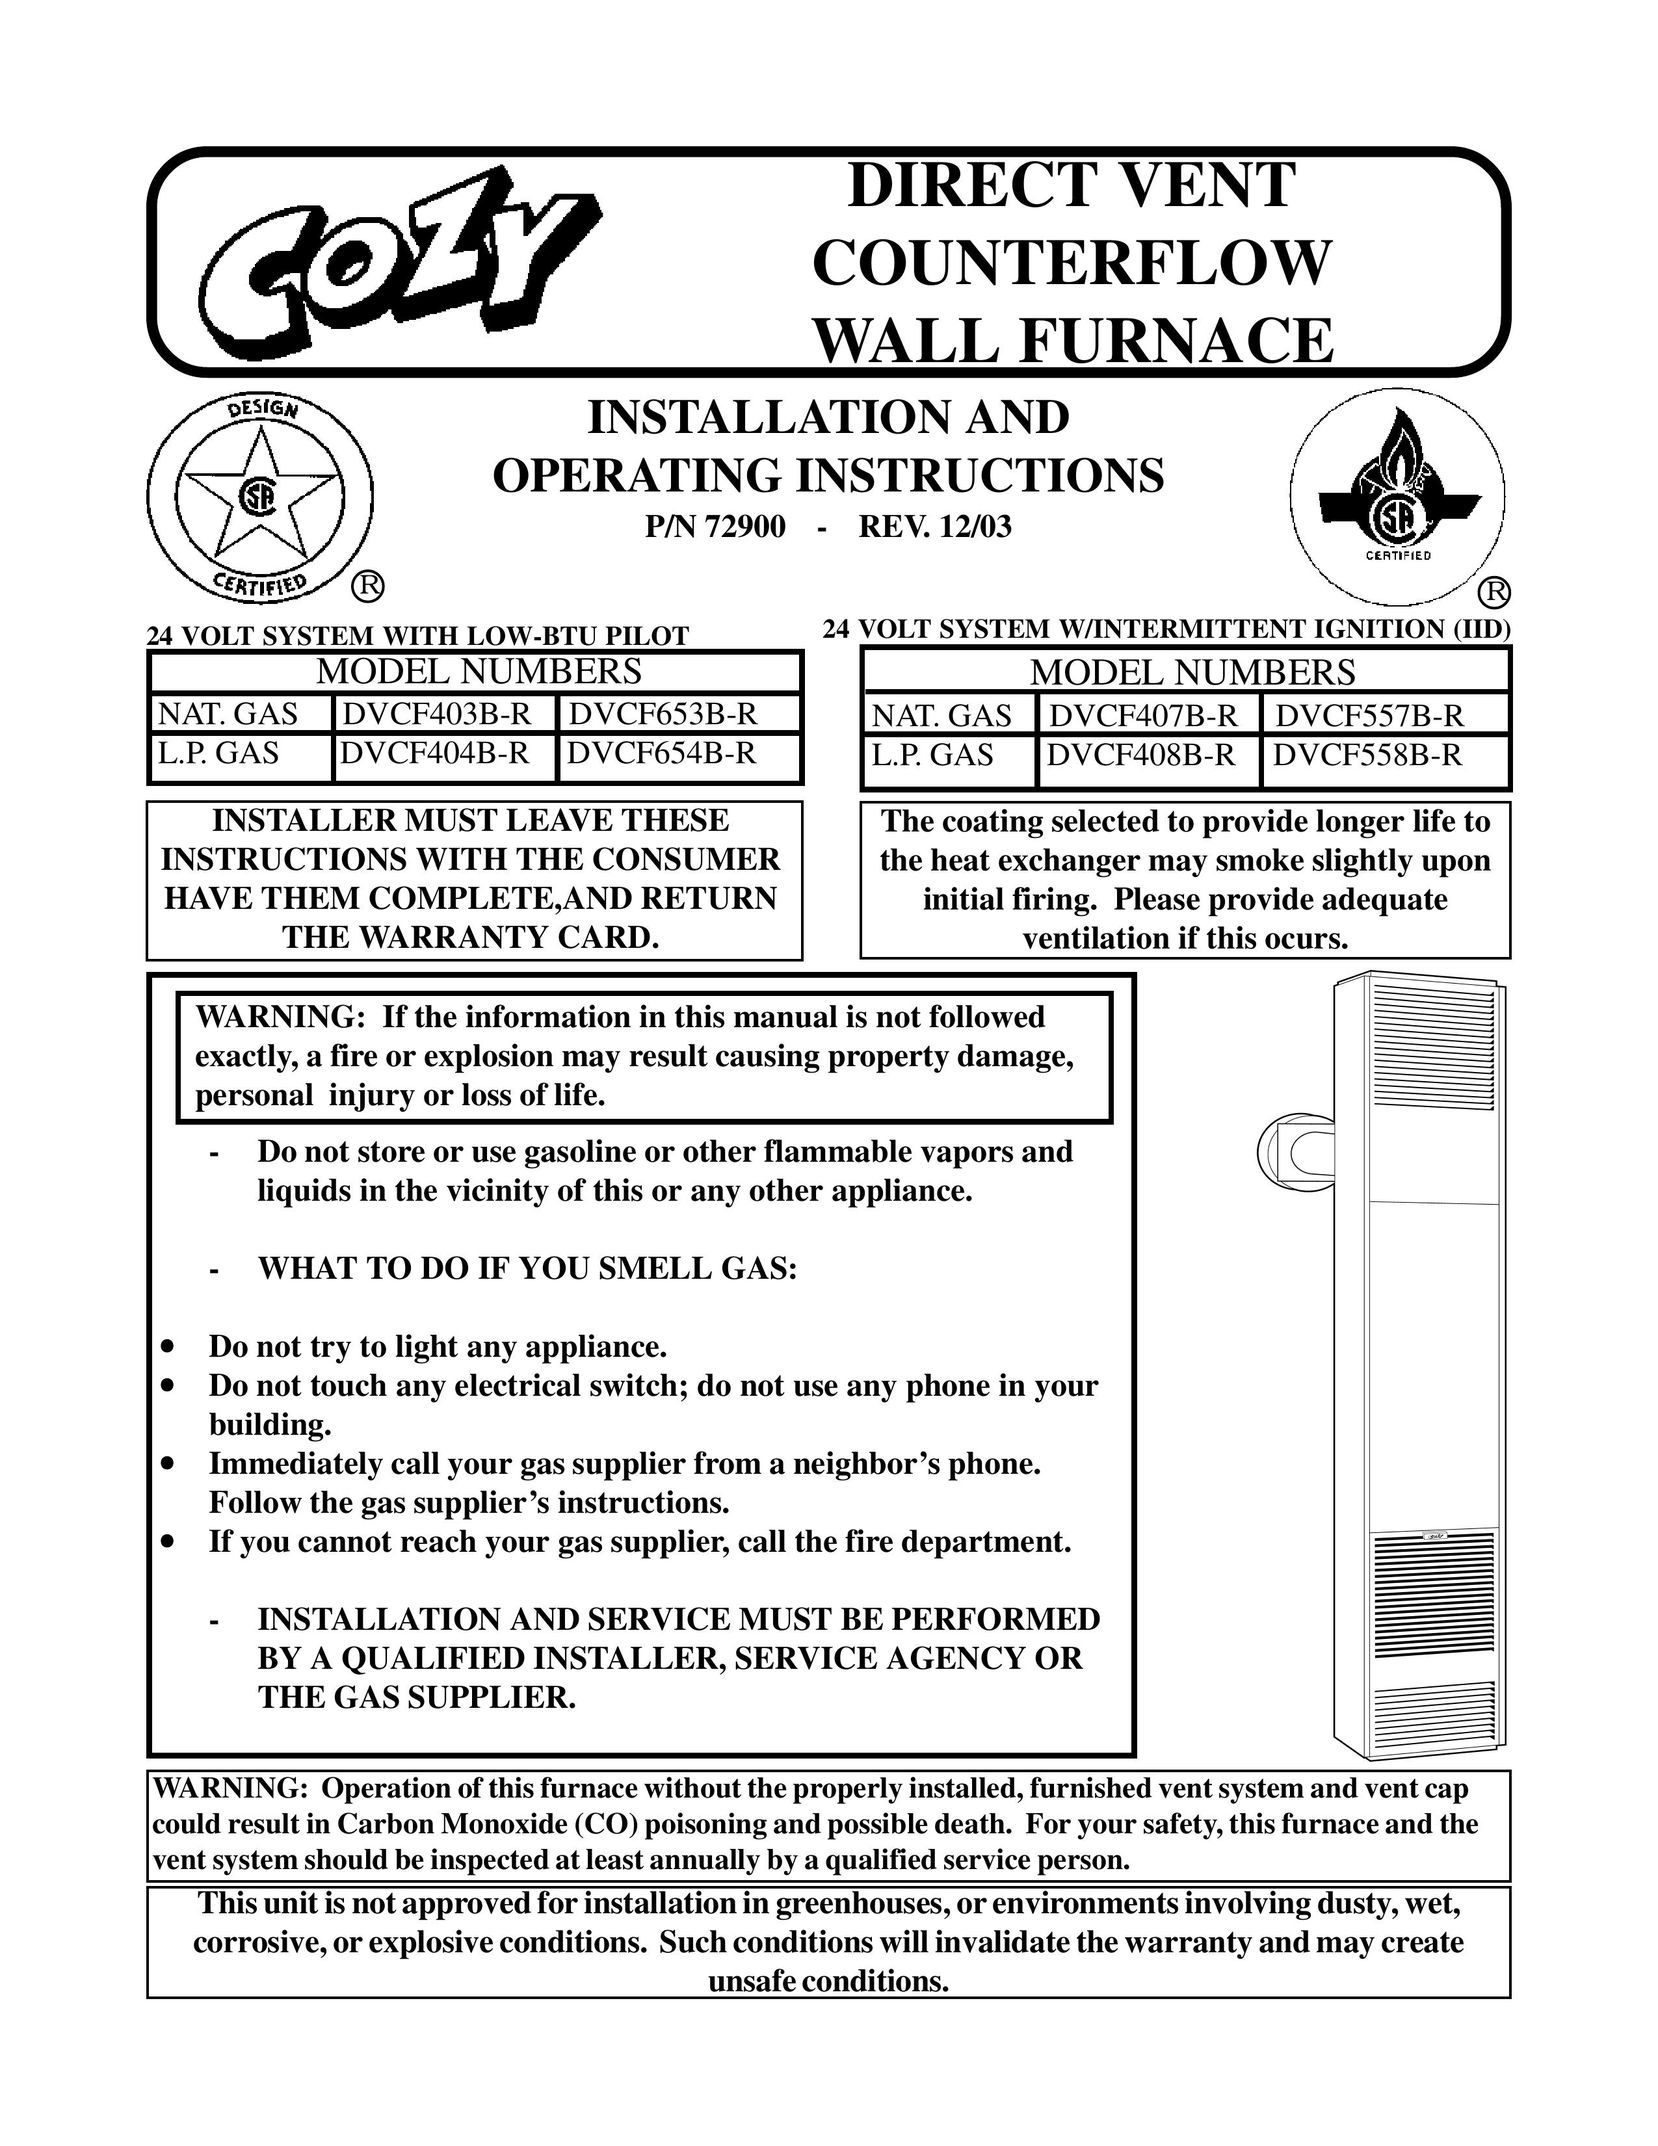 Louisville Tin and Stove DVCF653B-R Furnace User Manual